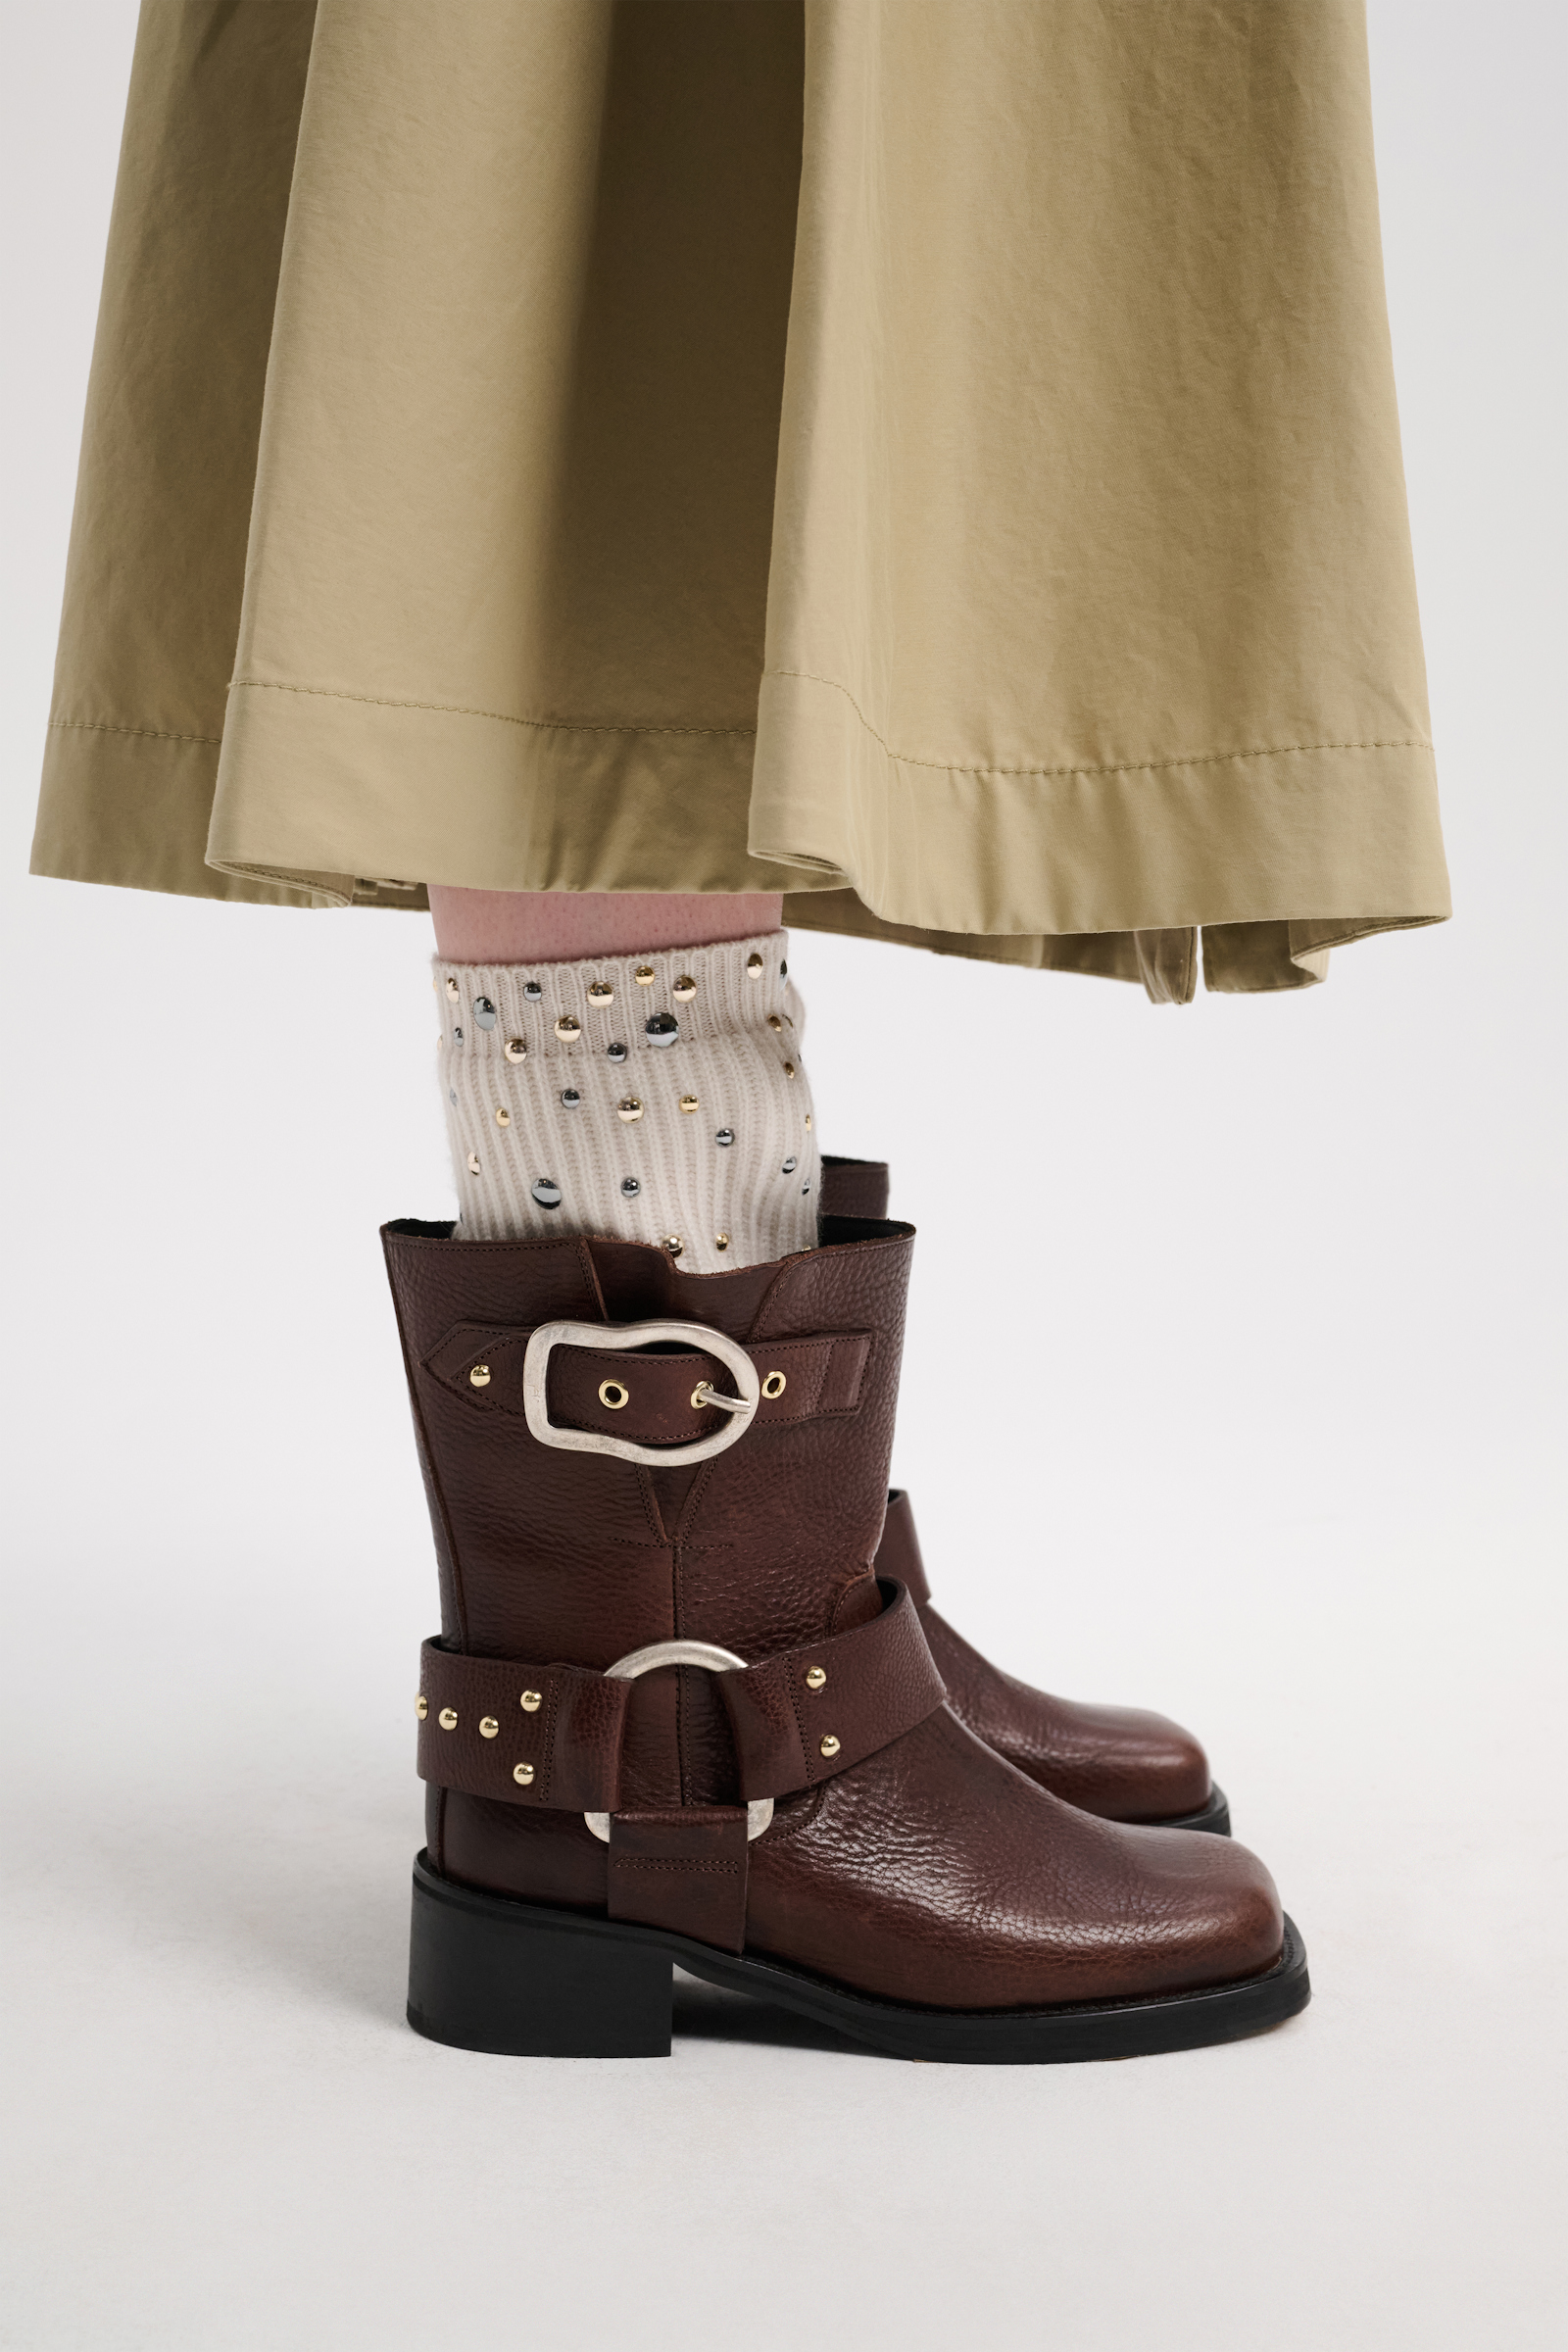 Dorothee Schumacher Stud-embellished cashmere leg warmers cozy white